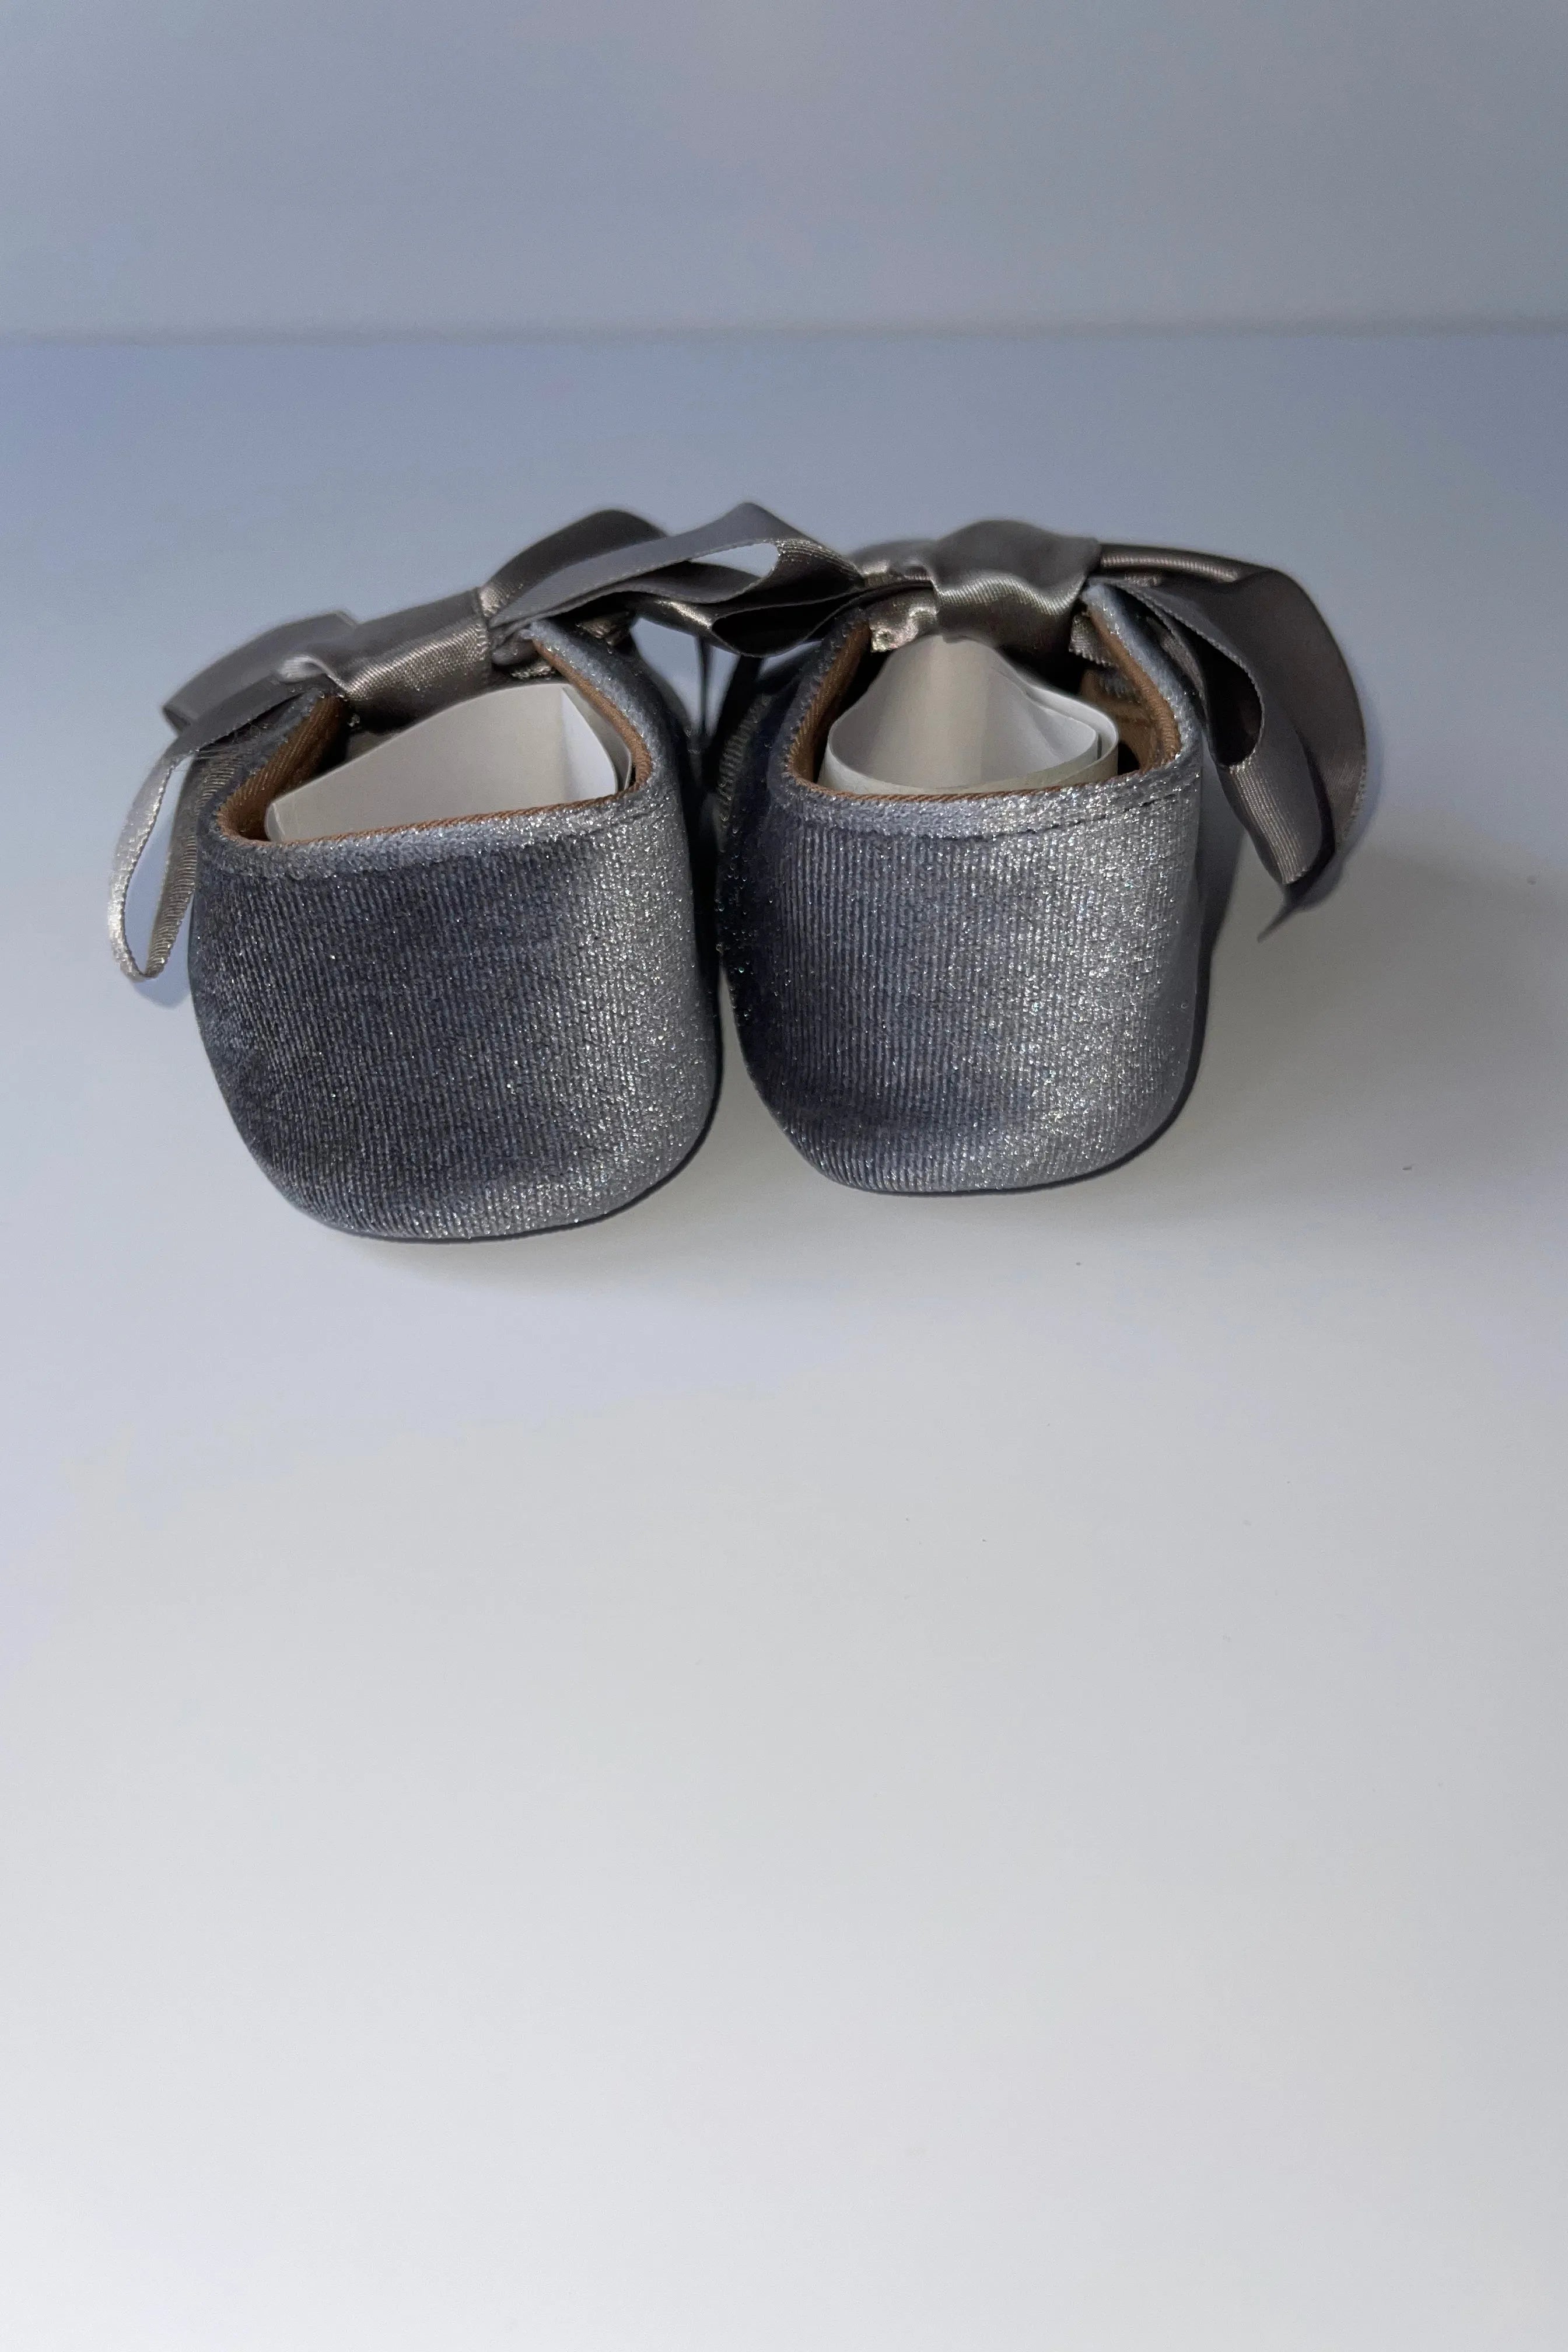 Baby Grey Velvet Bow Pram Shoes - dainty delilah spanish childrens clothing